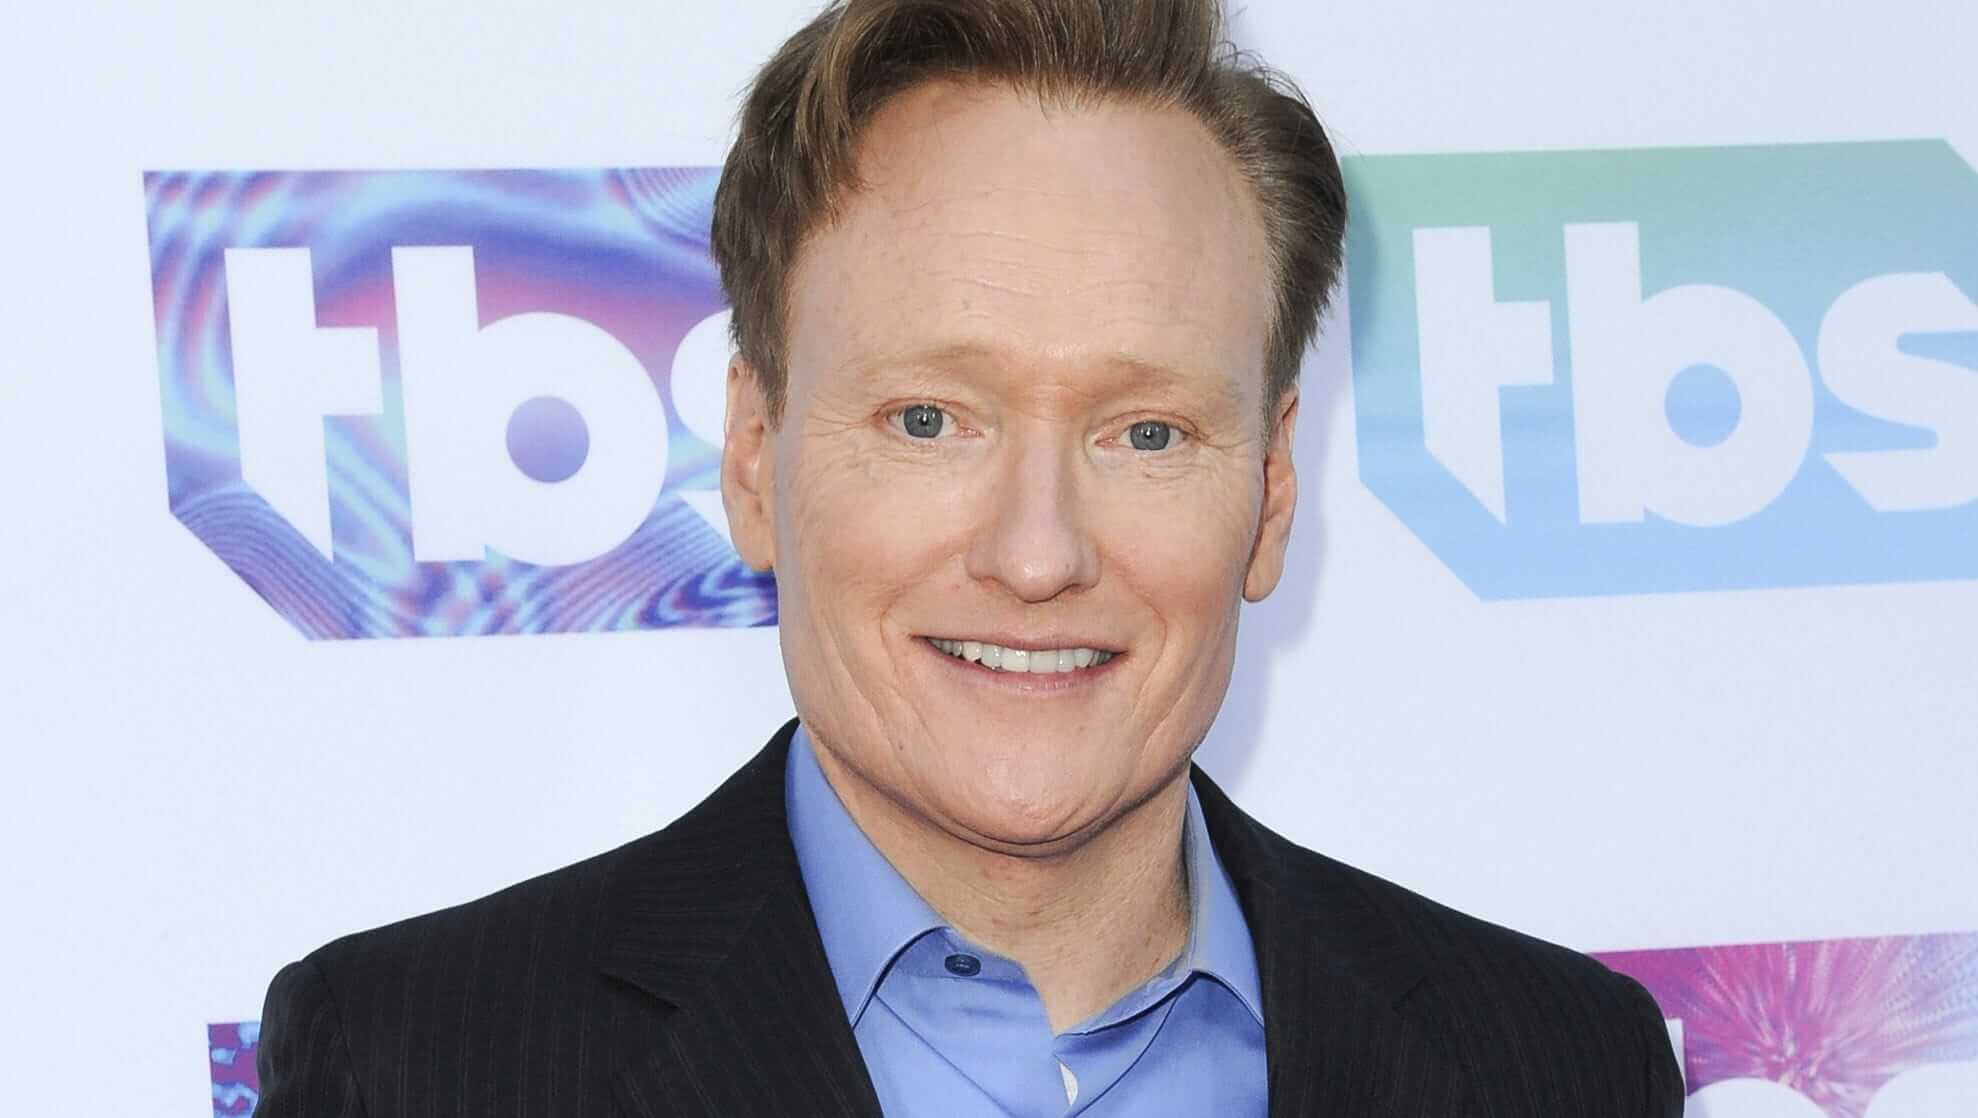 Comedian Conan O'Brien will shoot full shows using an iPhone